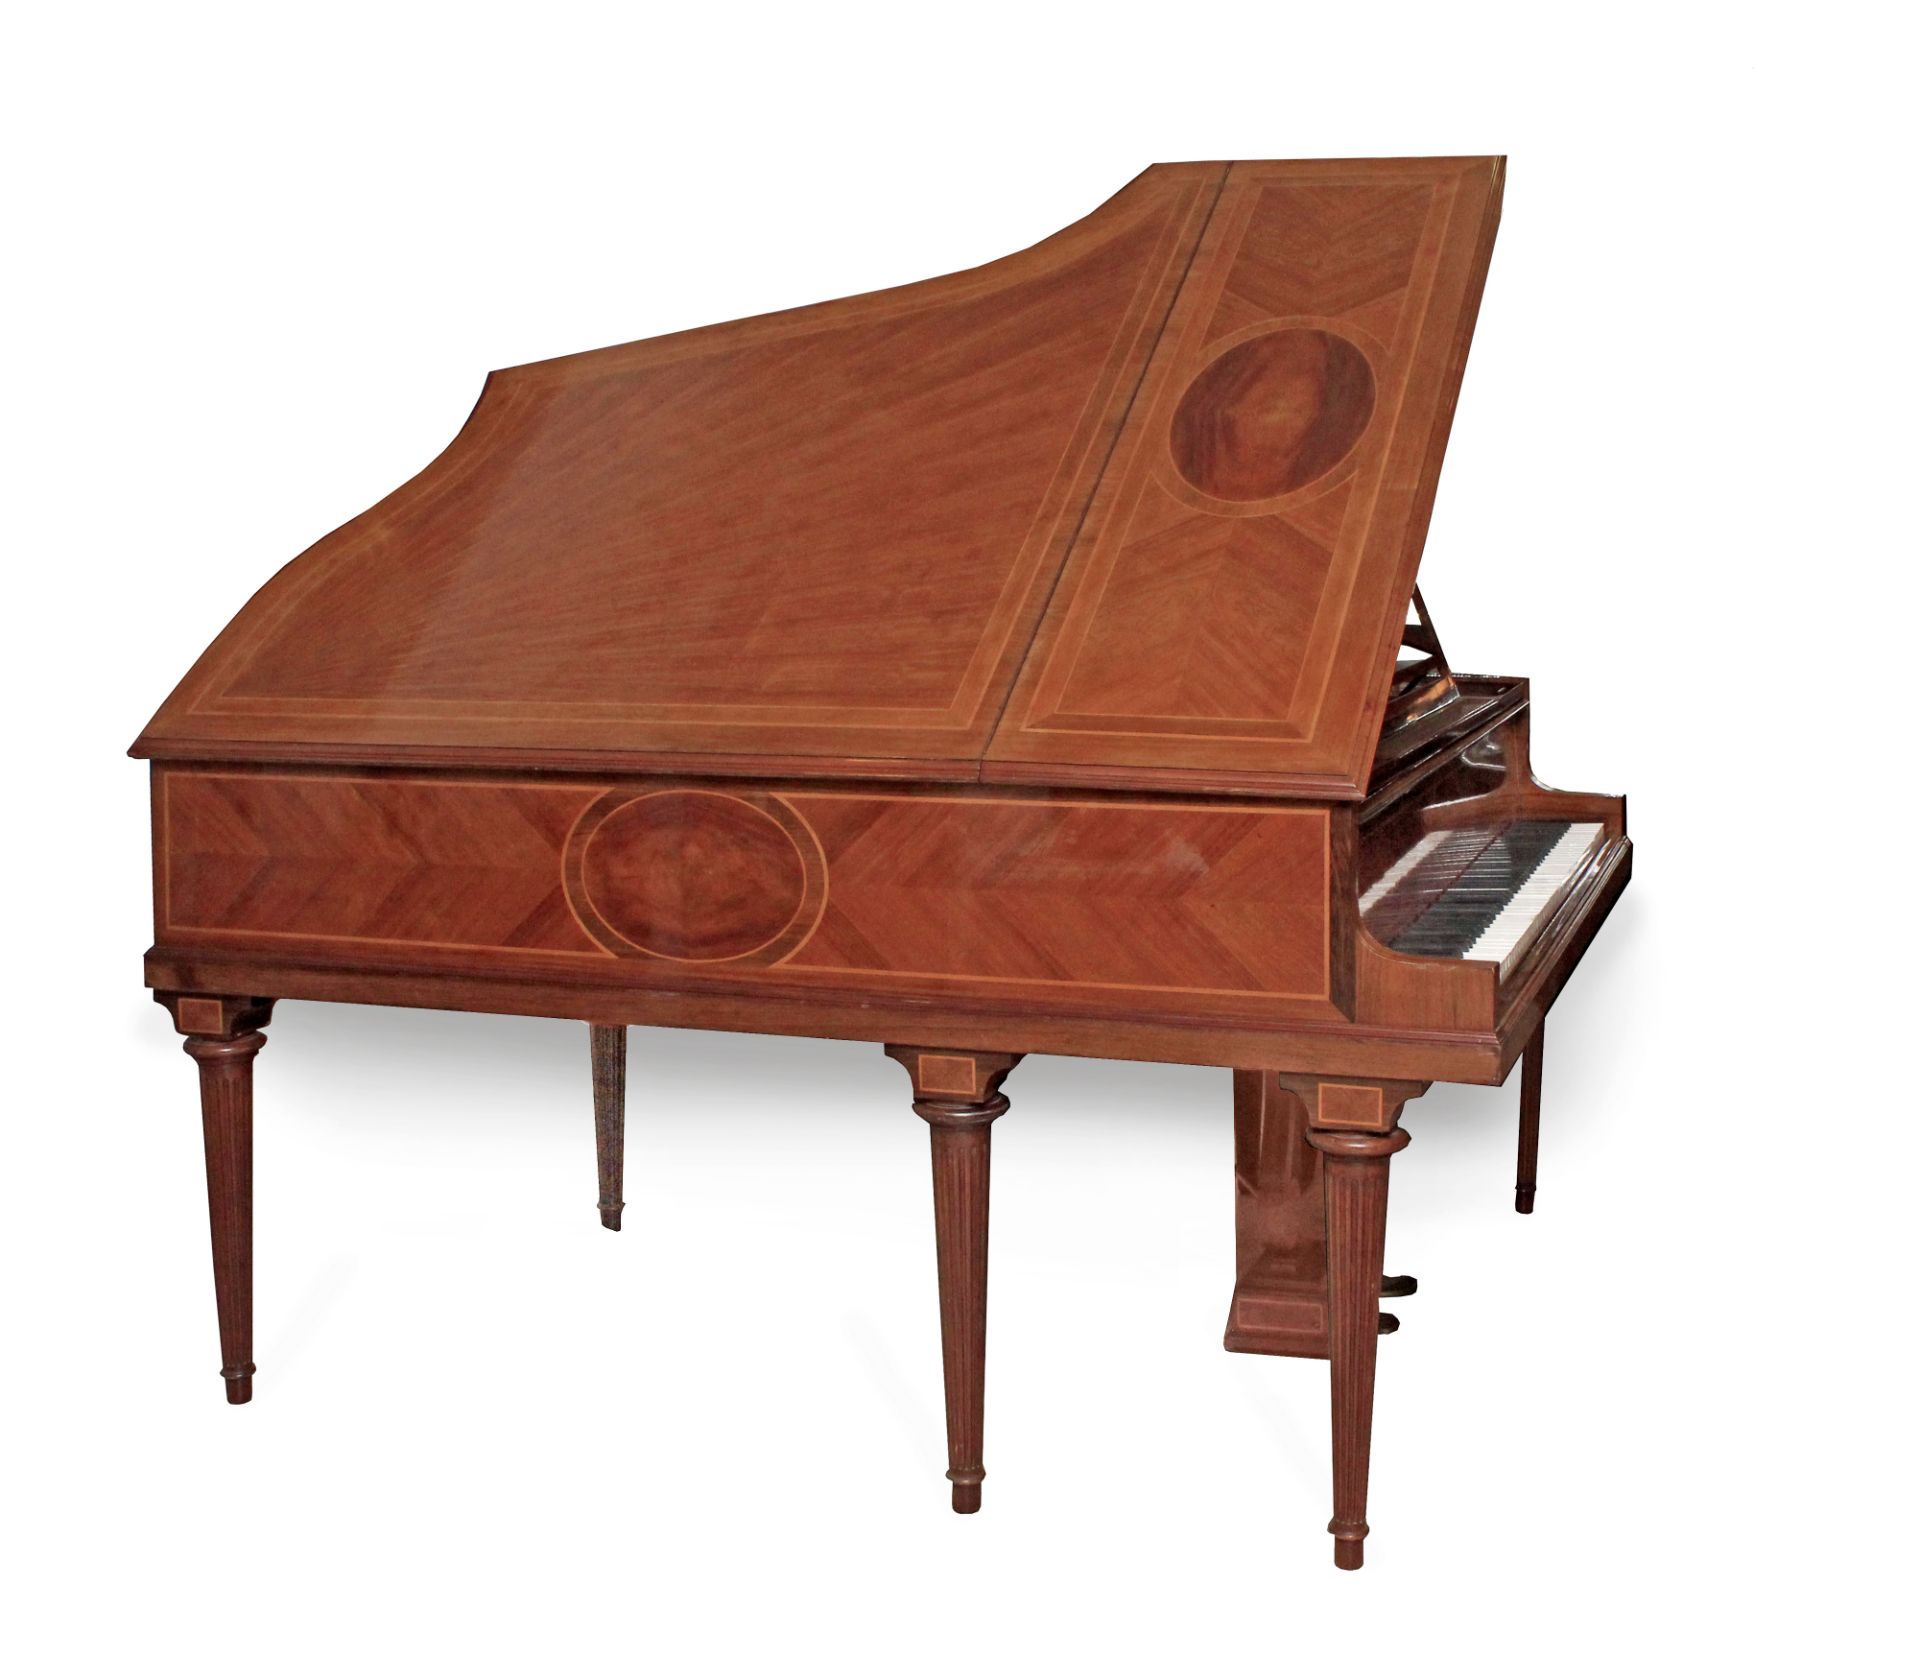 Pleyel. A 19th century Fernandino period rosewood grand piano - Image 3 of 5